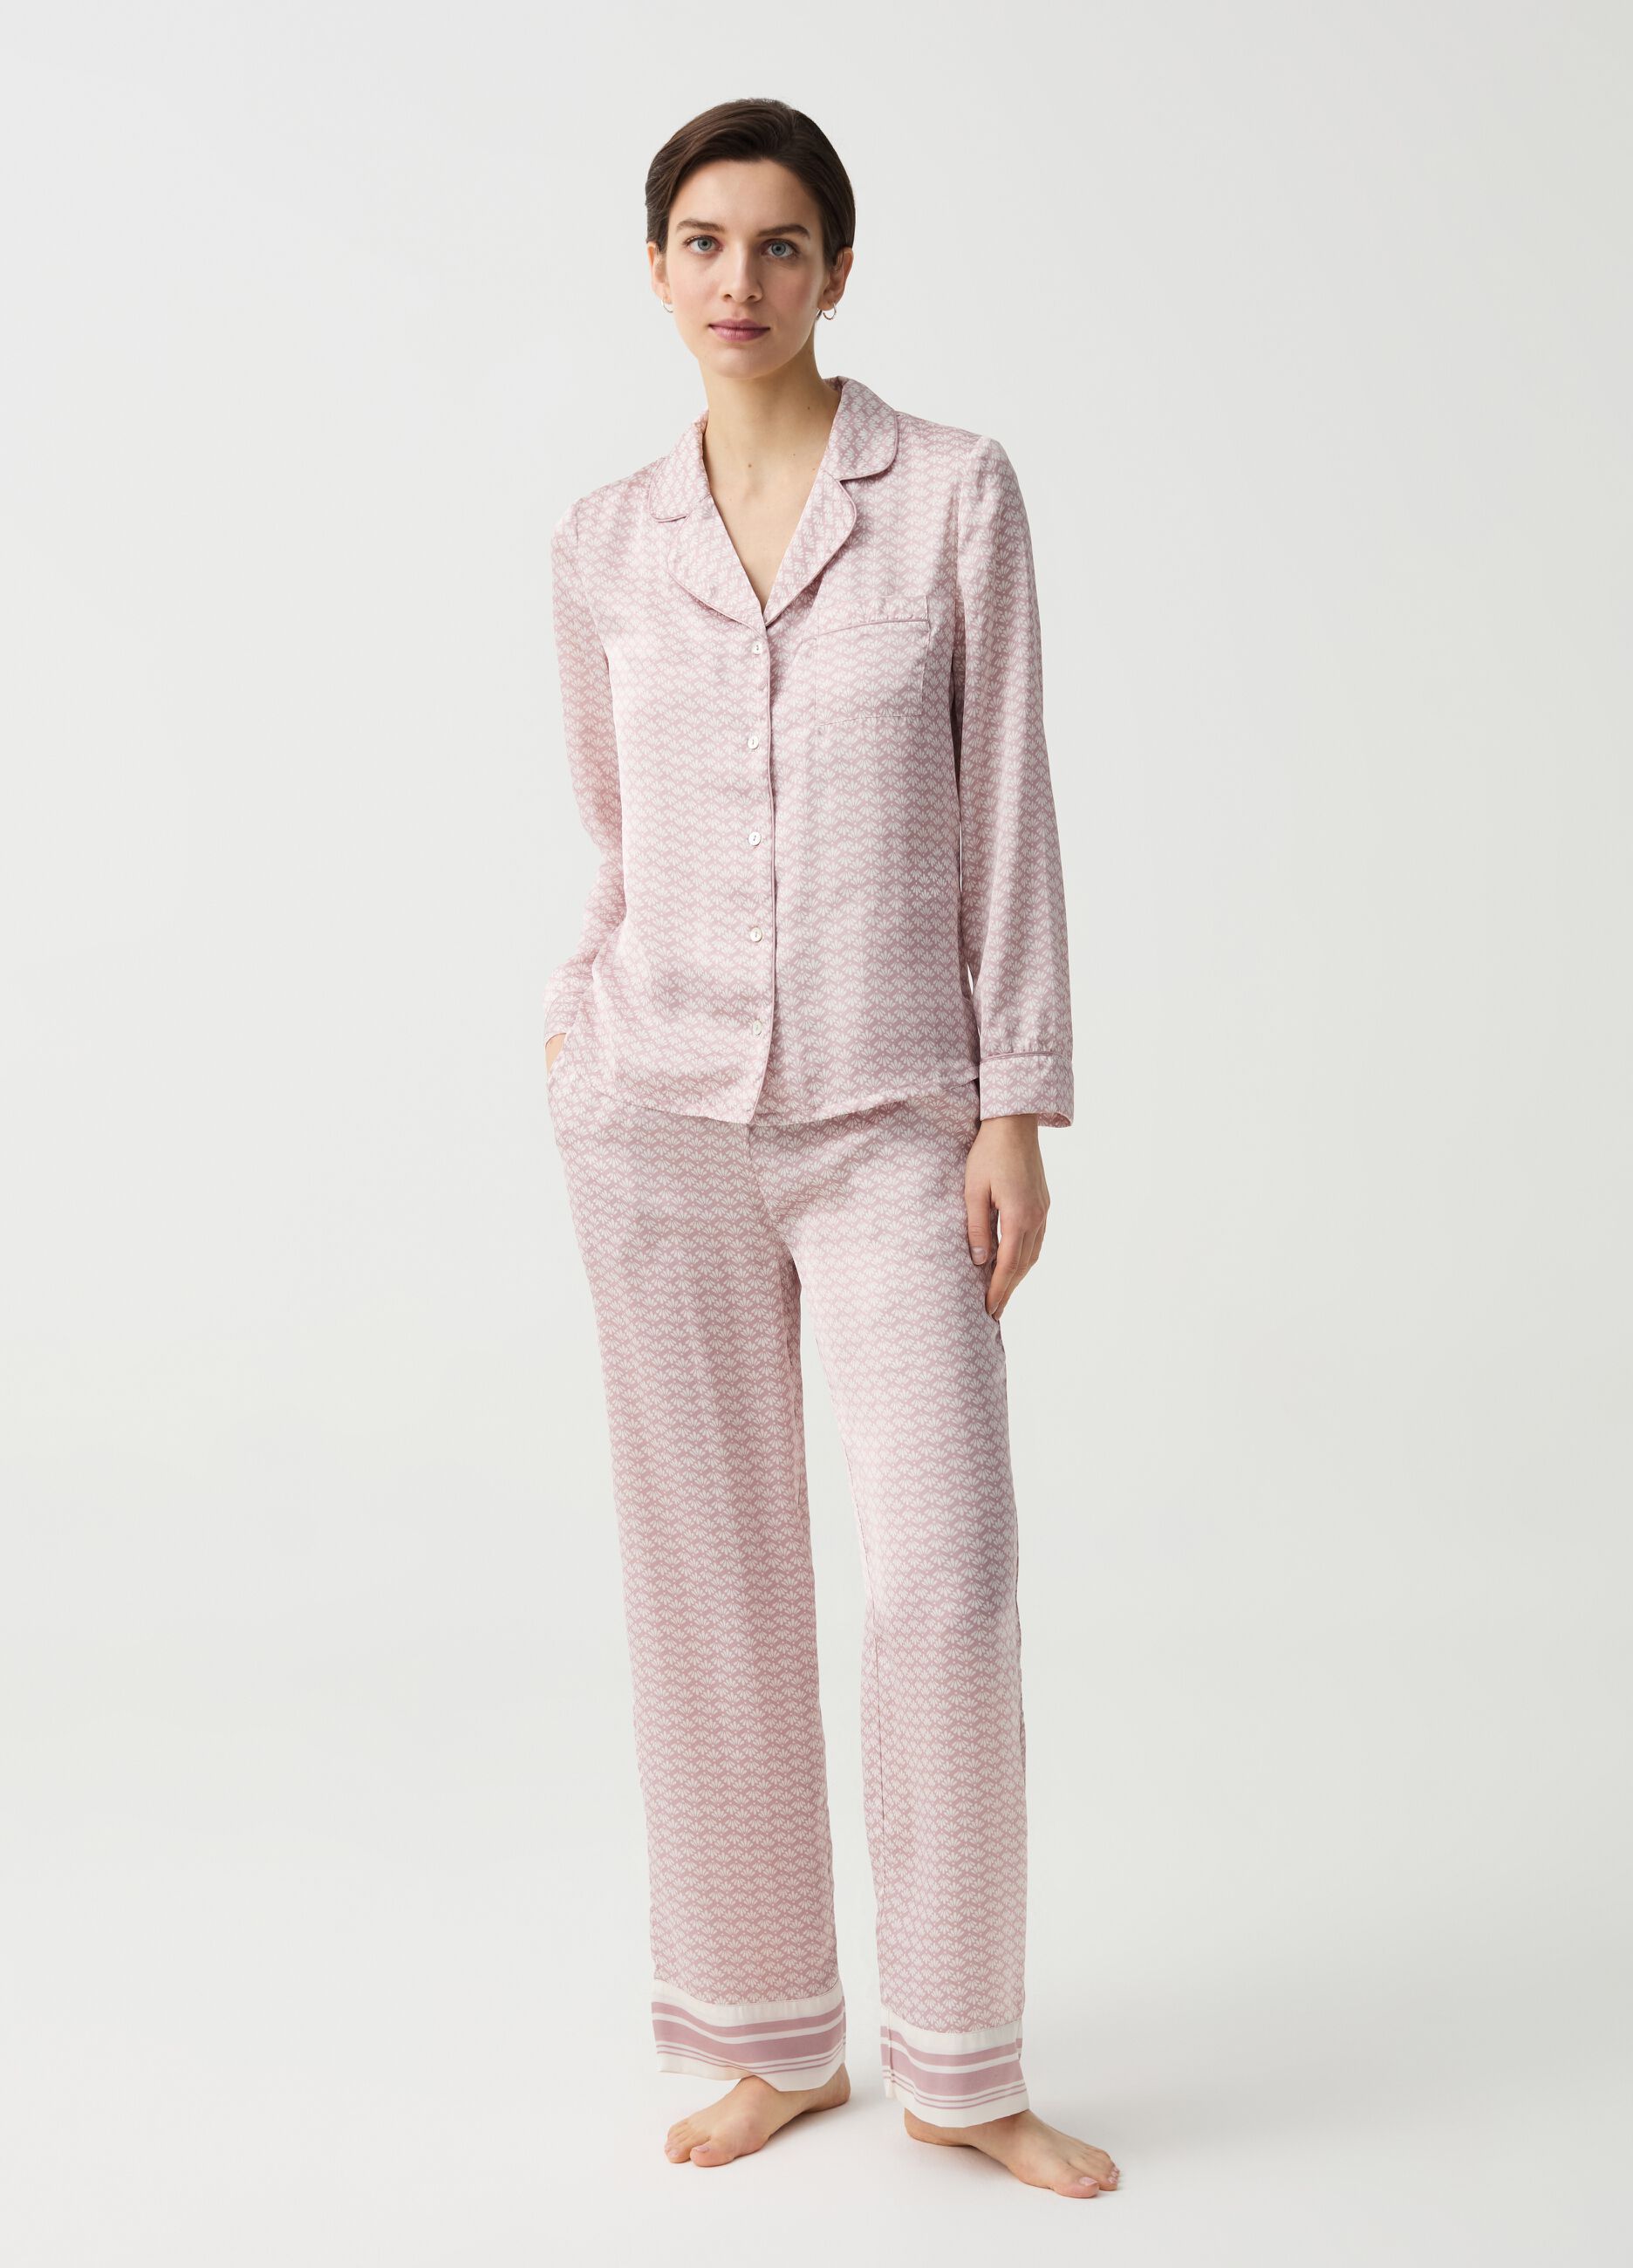 Long pyjama top in patterned satin